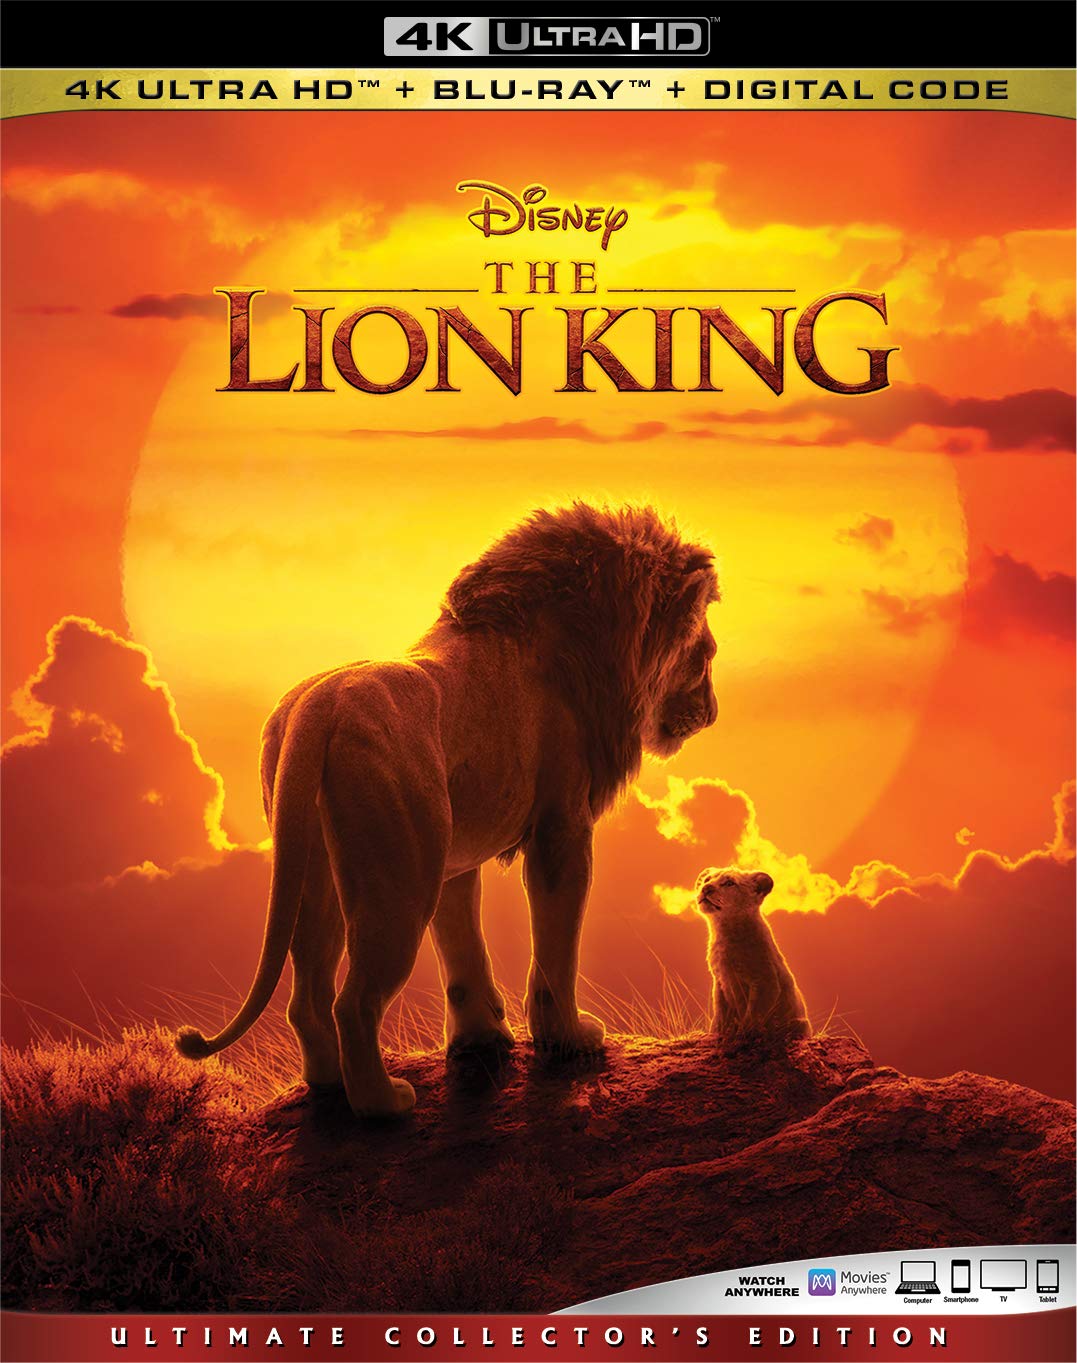 The Lion King 4k Blu-ray